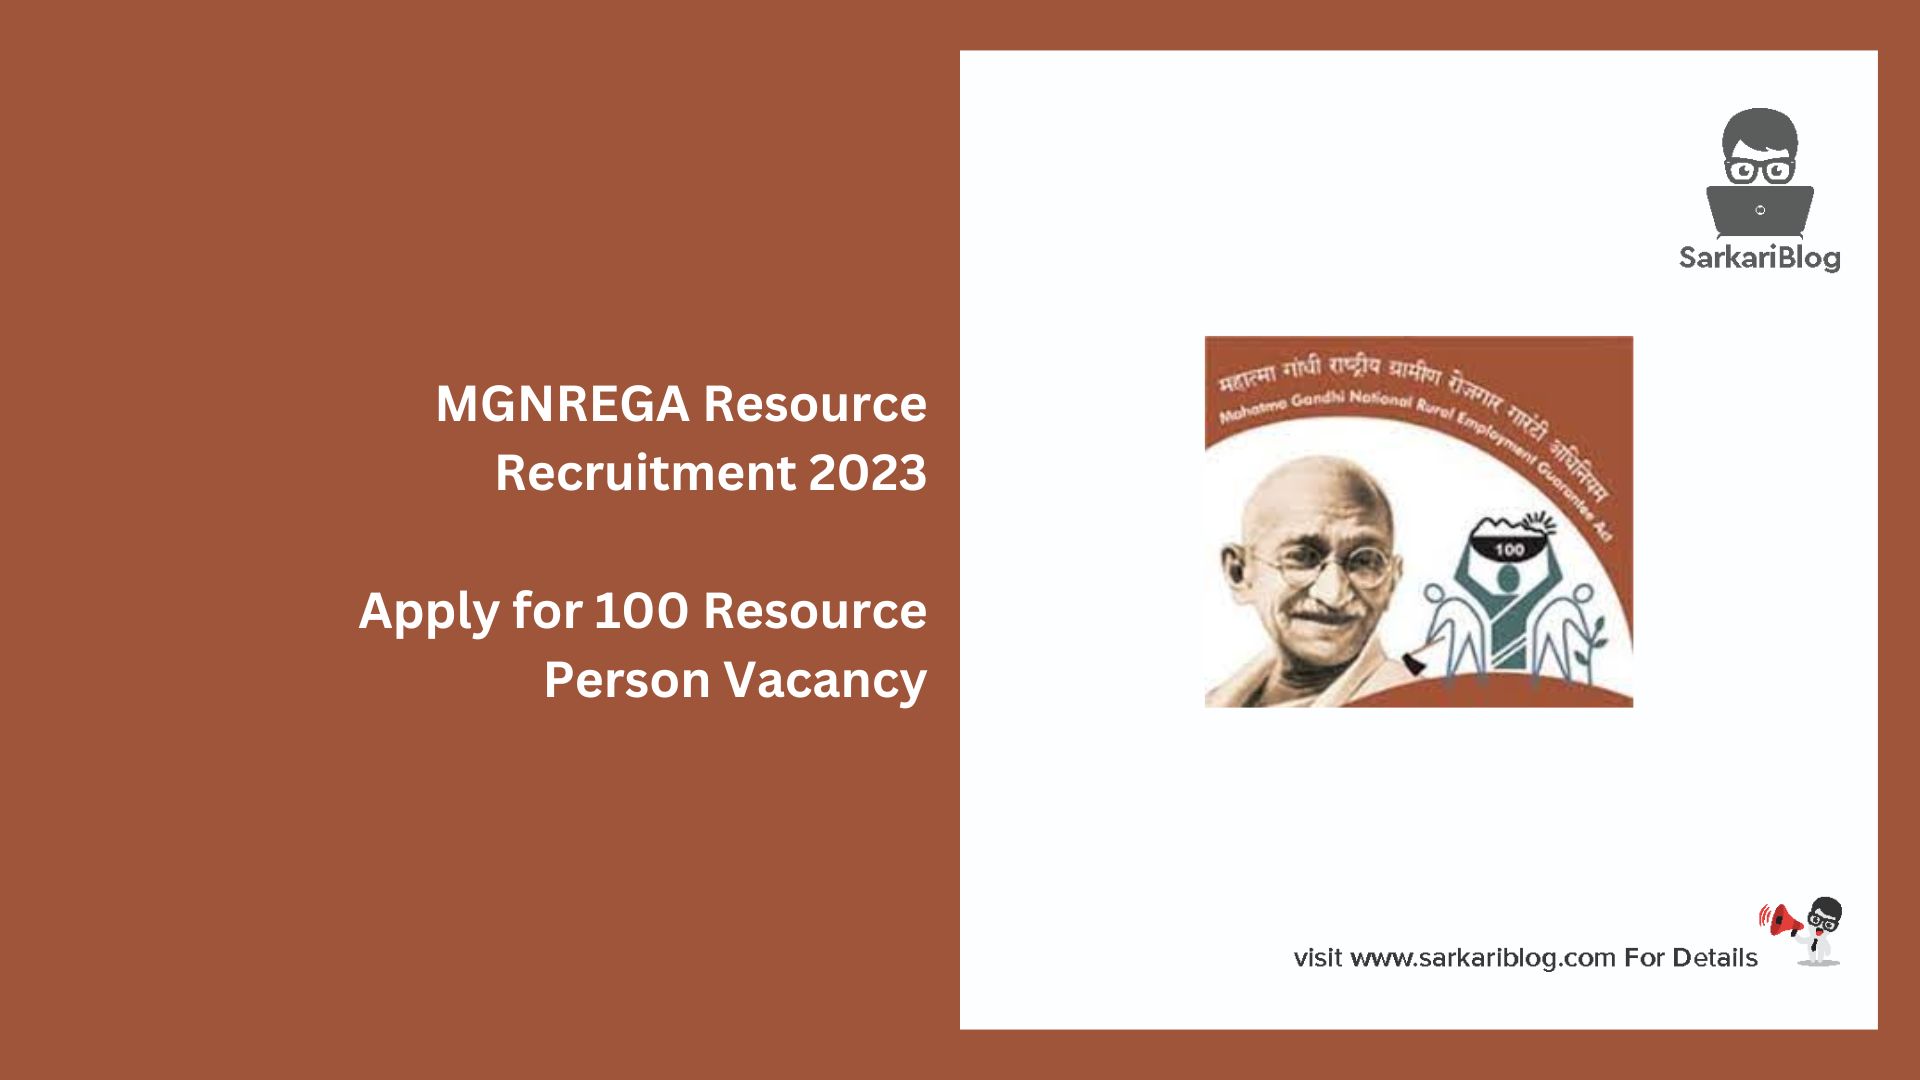 MGNREGA Resource Recruitment 2023